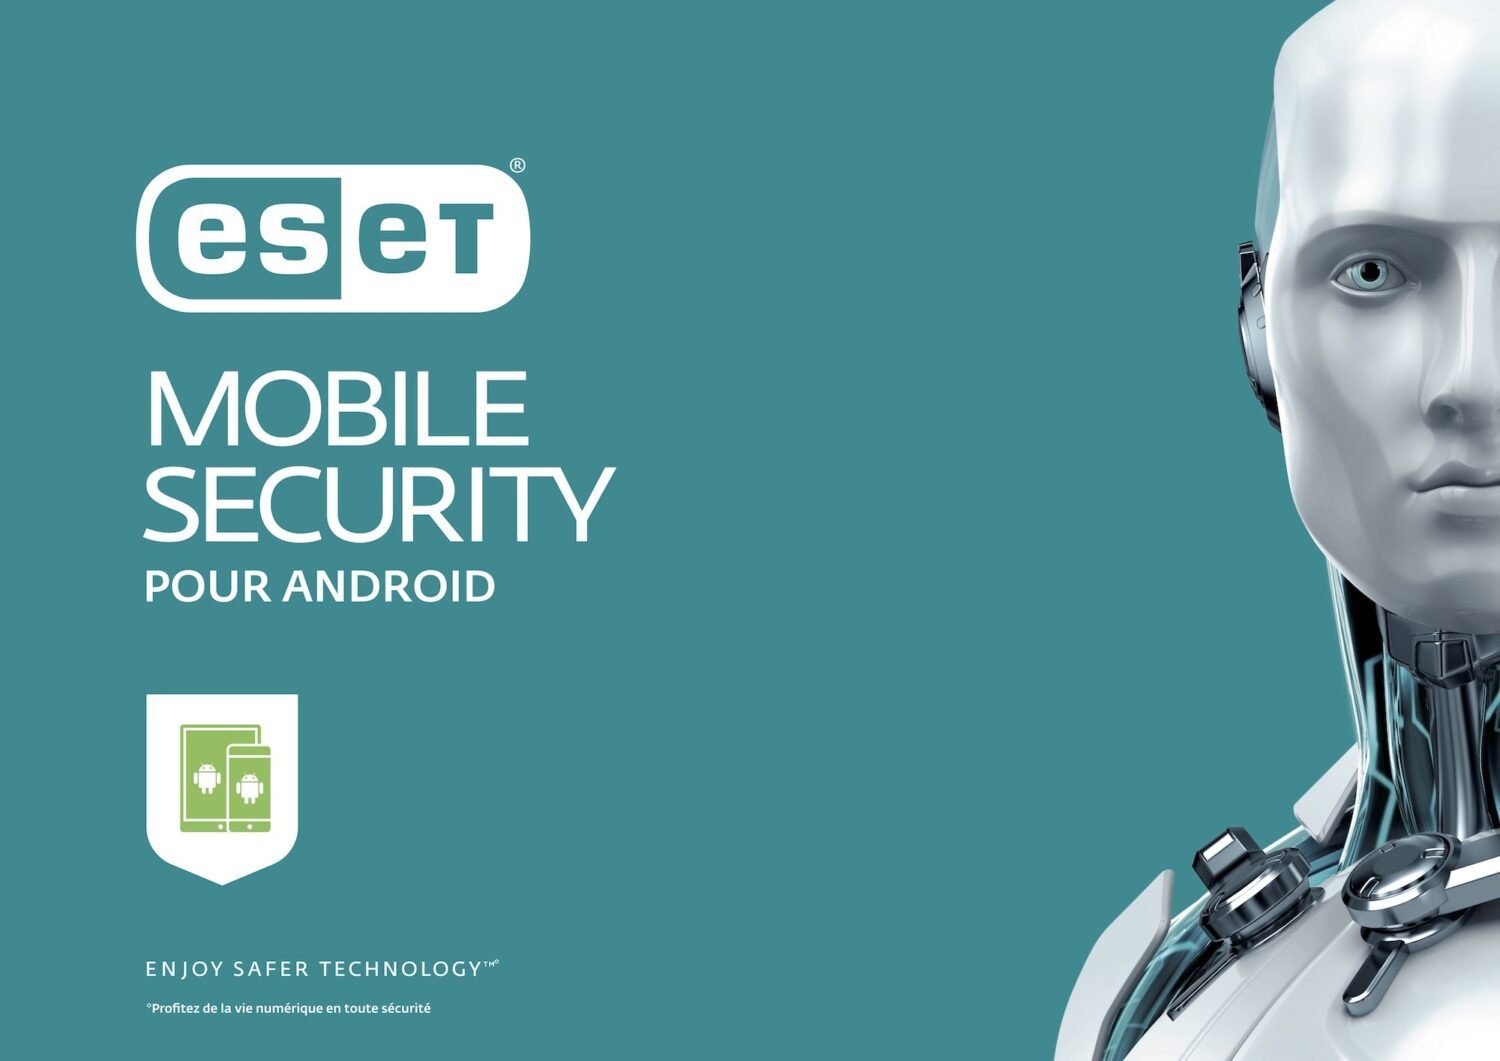 ESET android app watch EMS Fiche Produit V10 1500x1061 ESET Android App Watch vous protège du piratage – Lukas Stefanko interview au MWC 19 Android